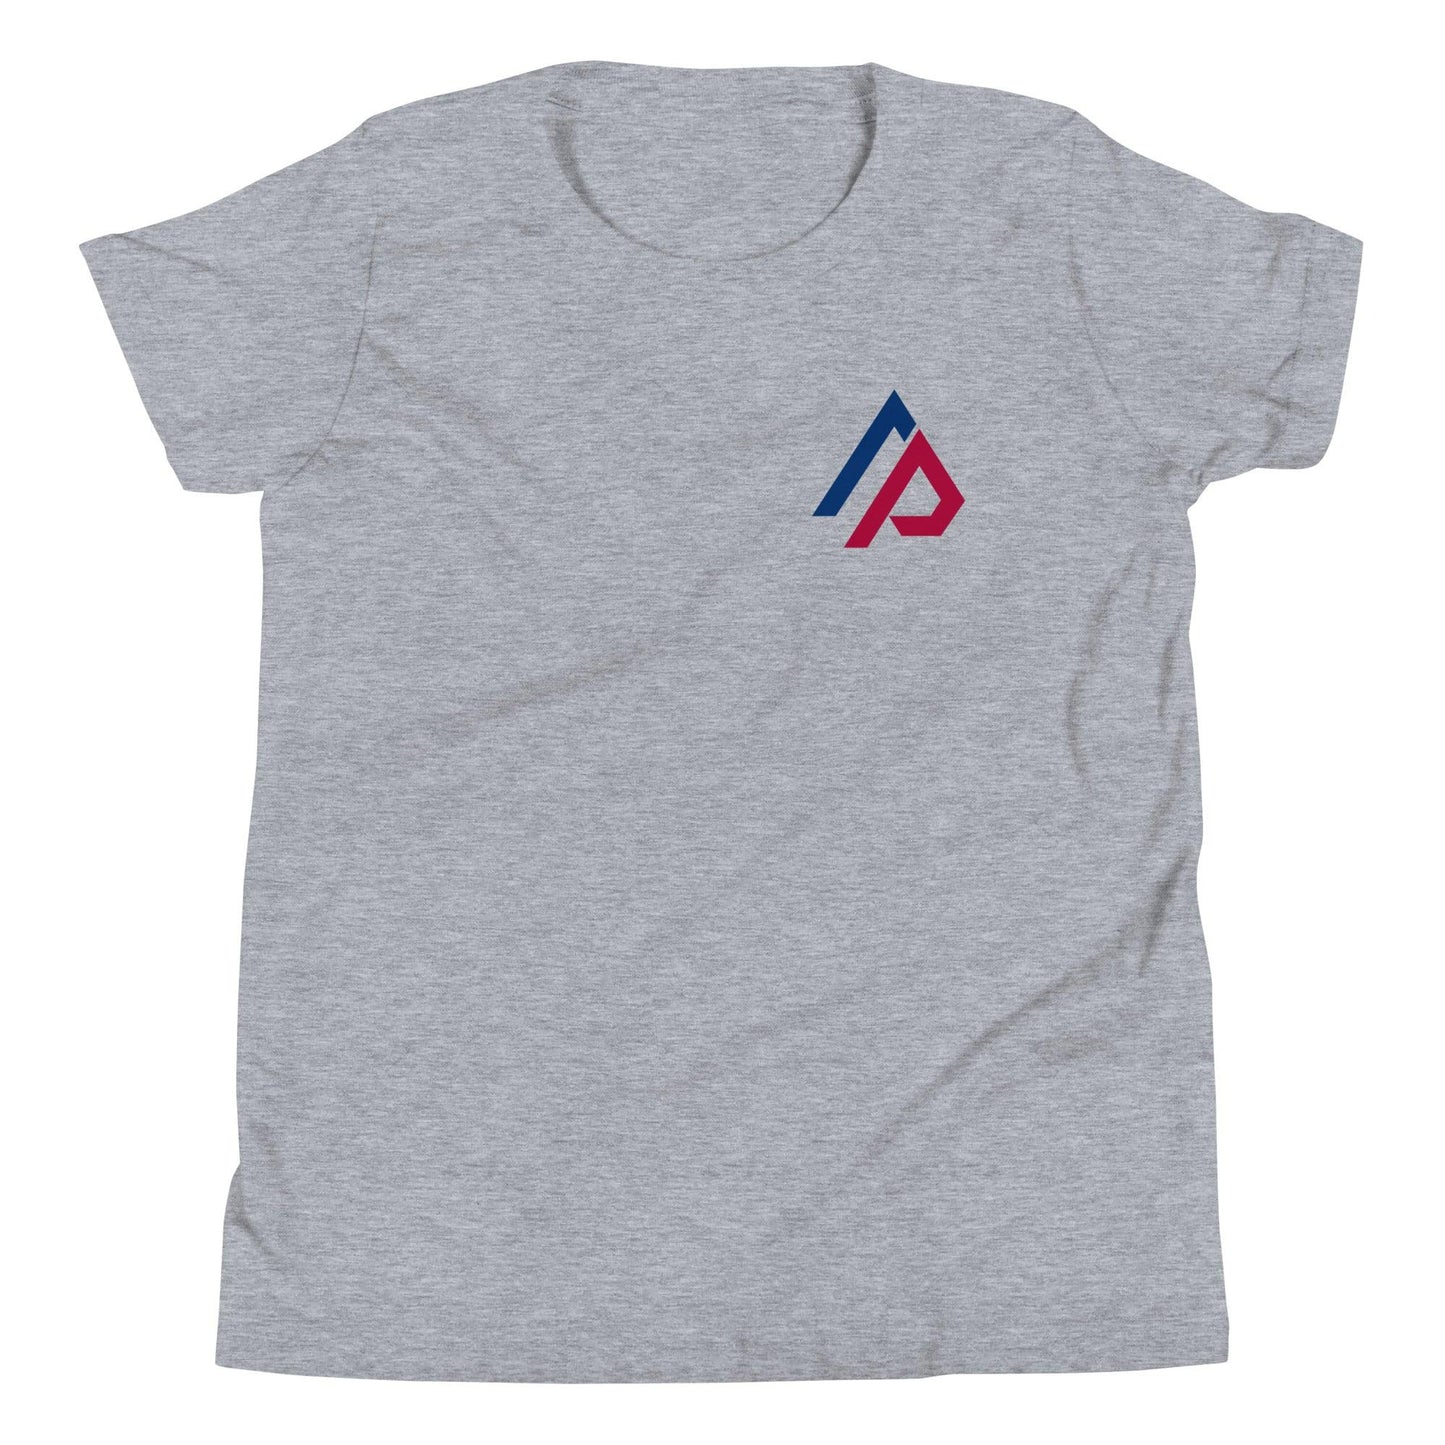 Anderson Paulino "Essential" Youth T-Shirt - Fan Arch